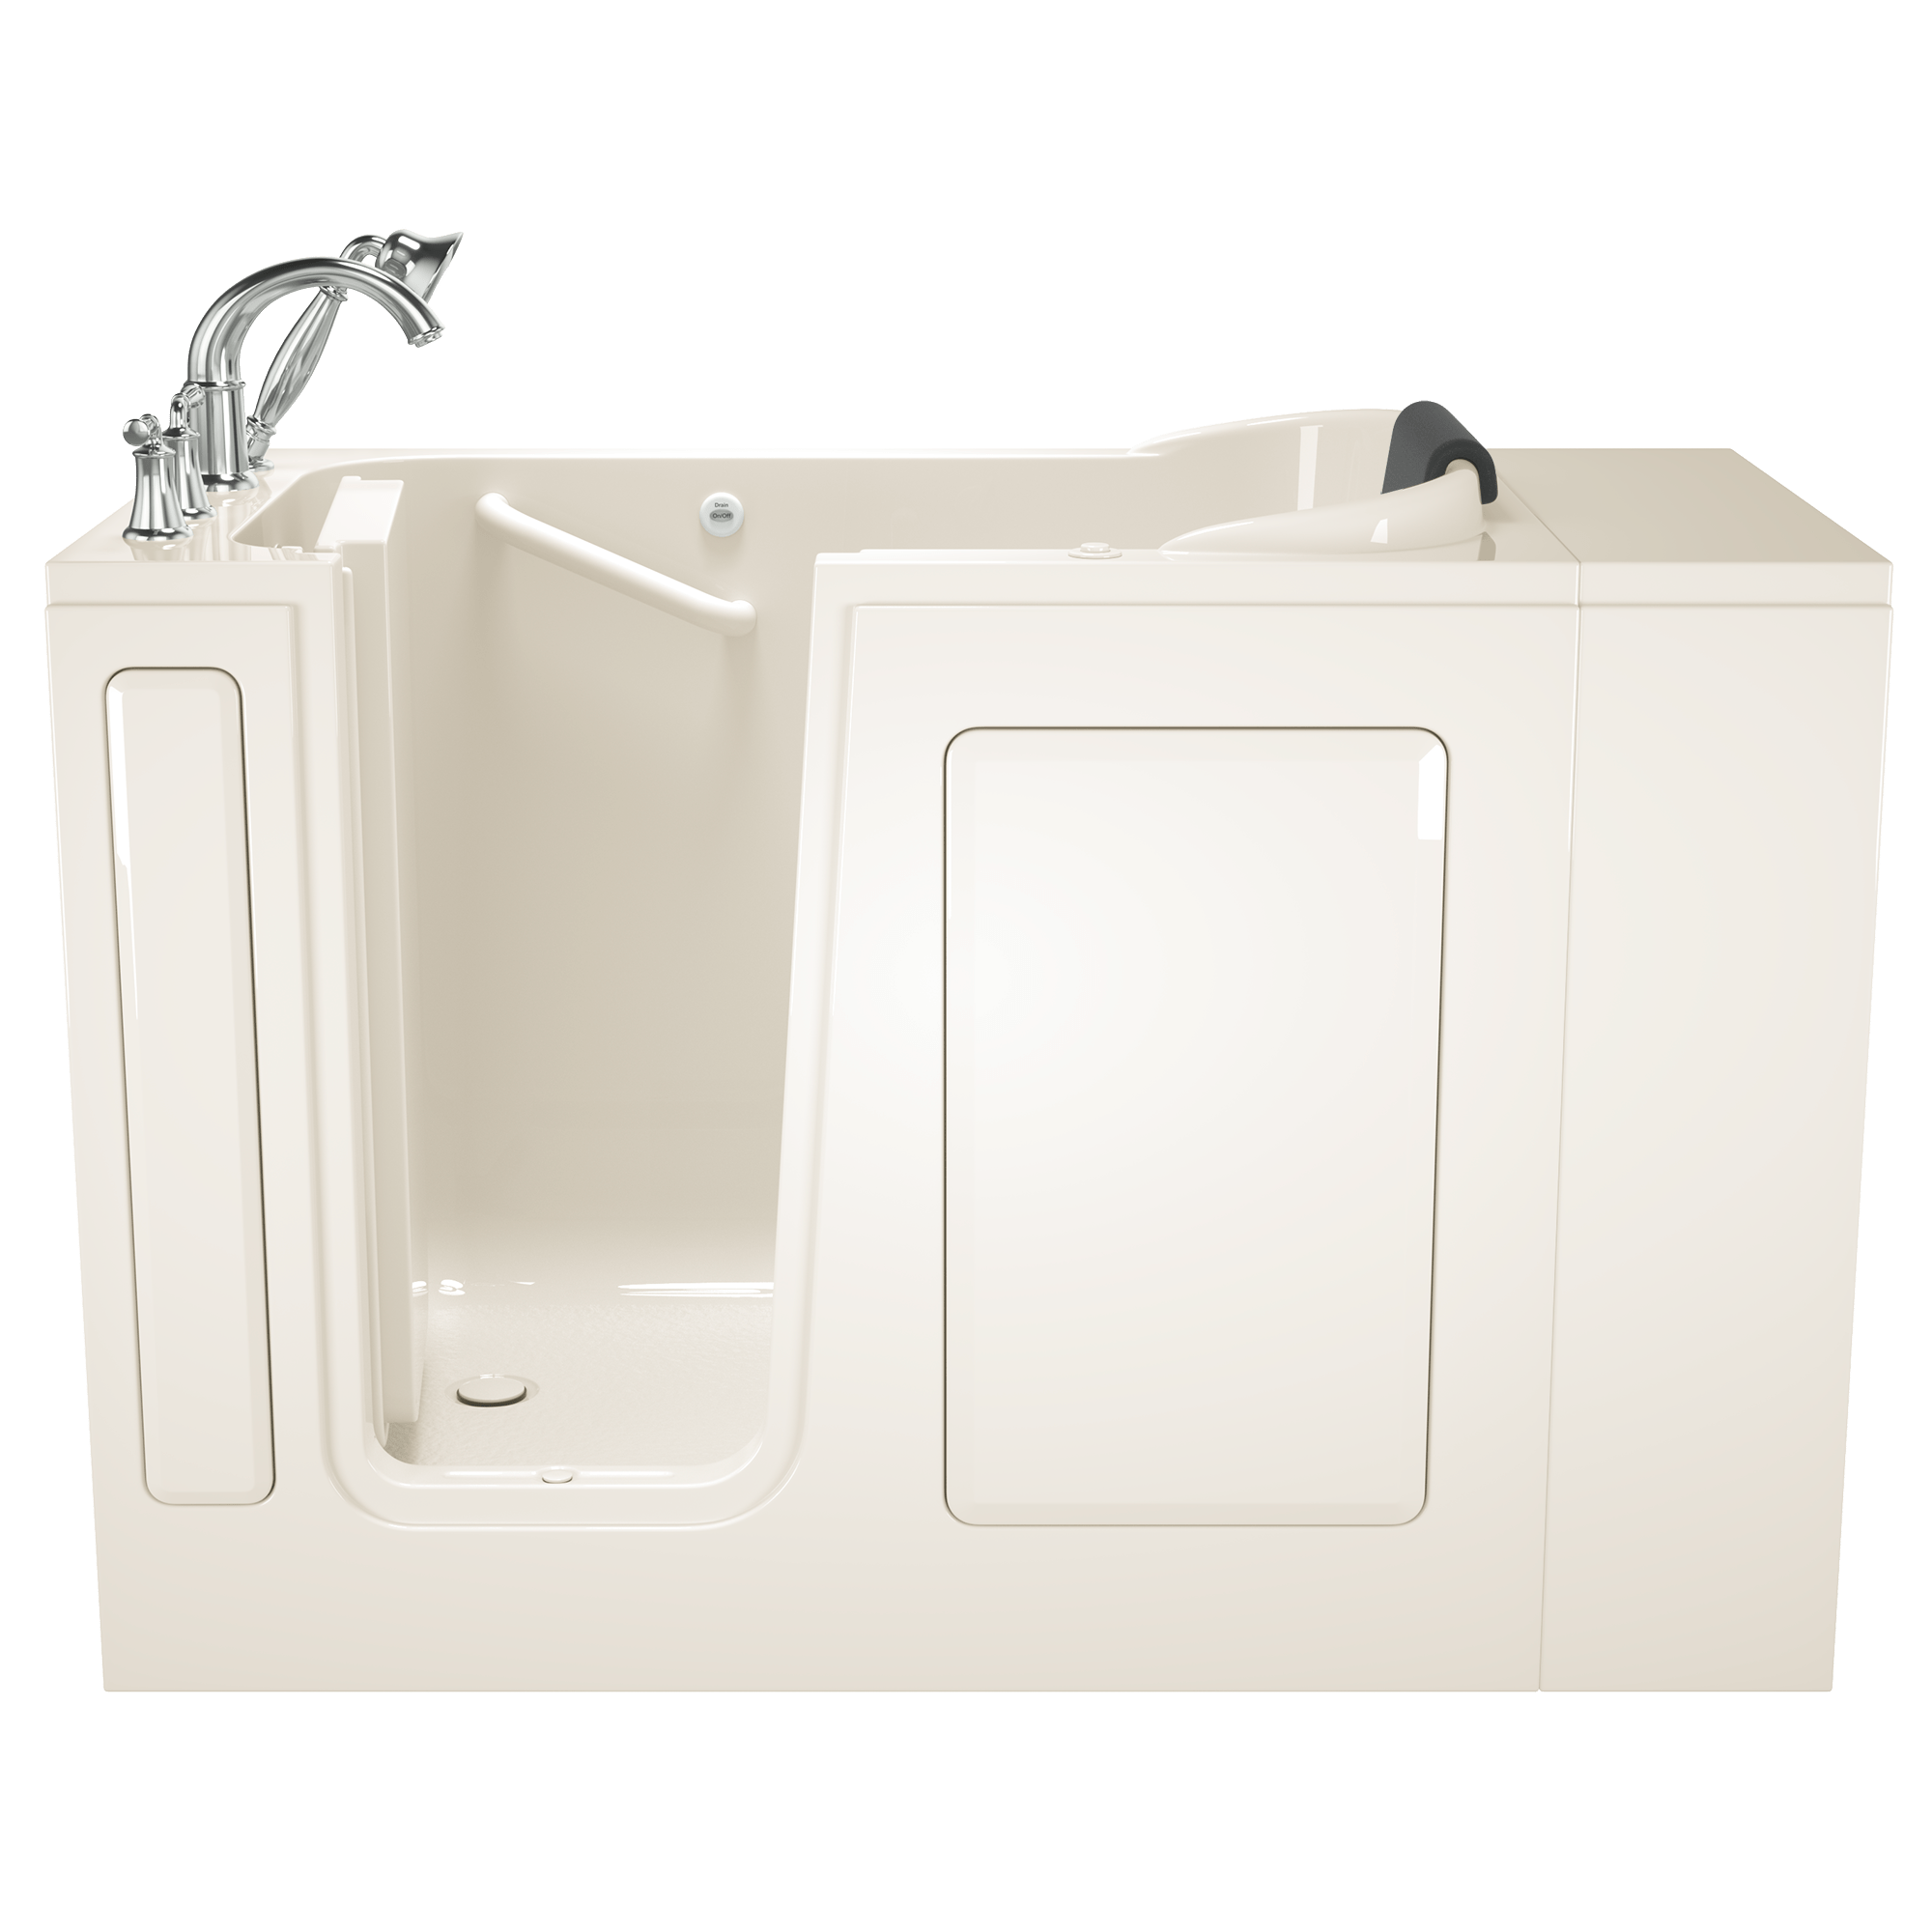 Gelcoat Premium Series 48x28 Inch Walk In Bathtub with Jet Massage System   Left Hand Door and Drain ST BISCUIT